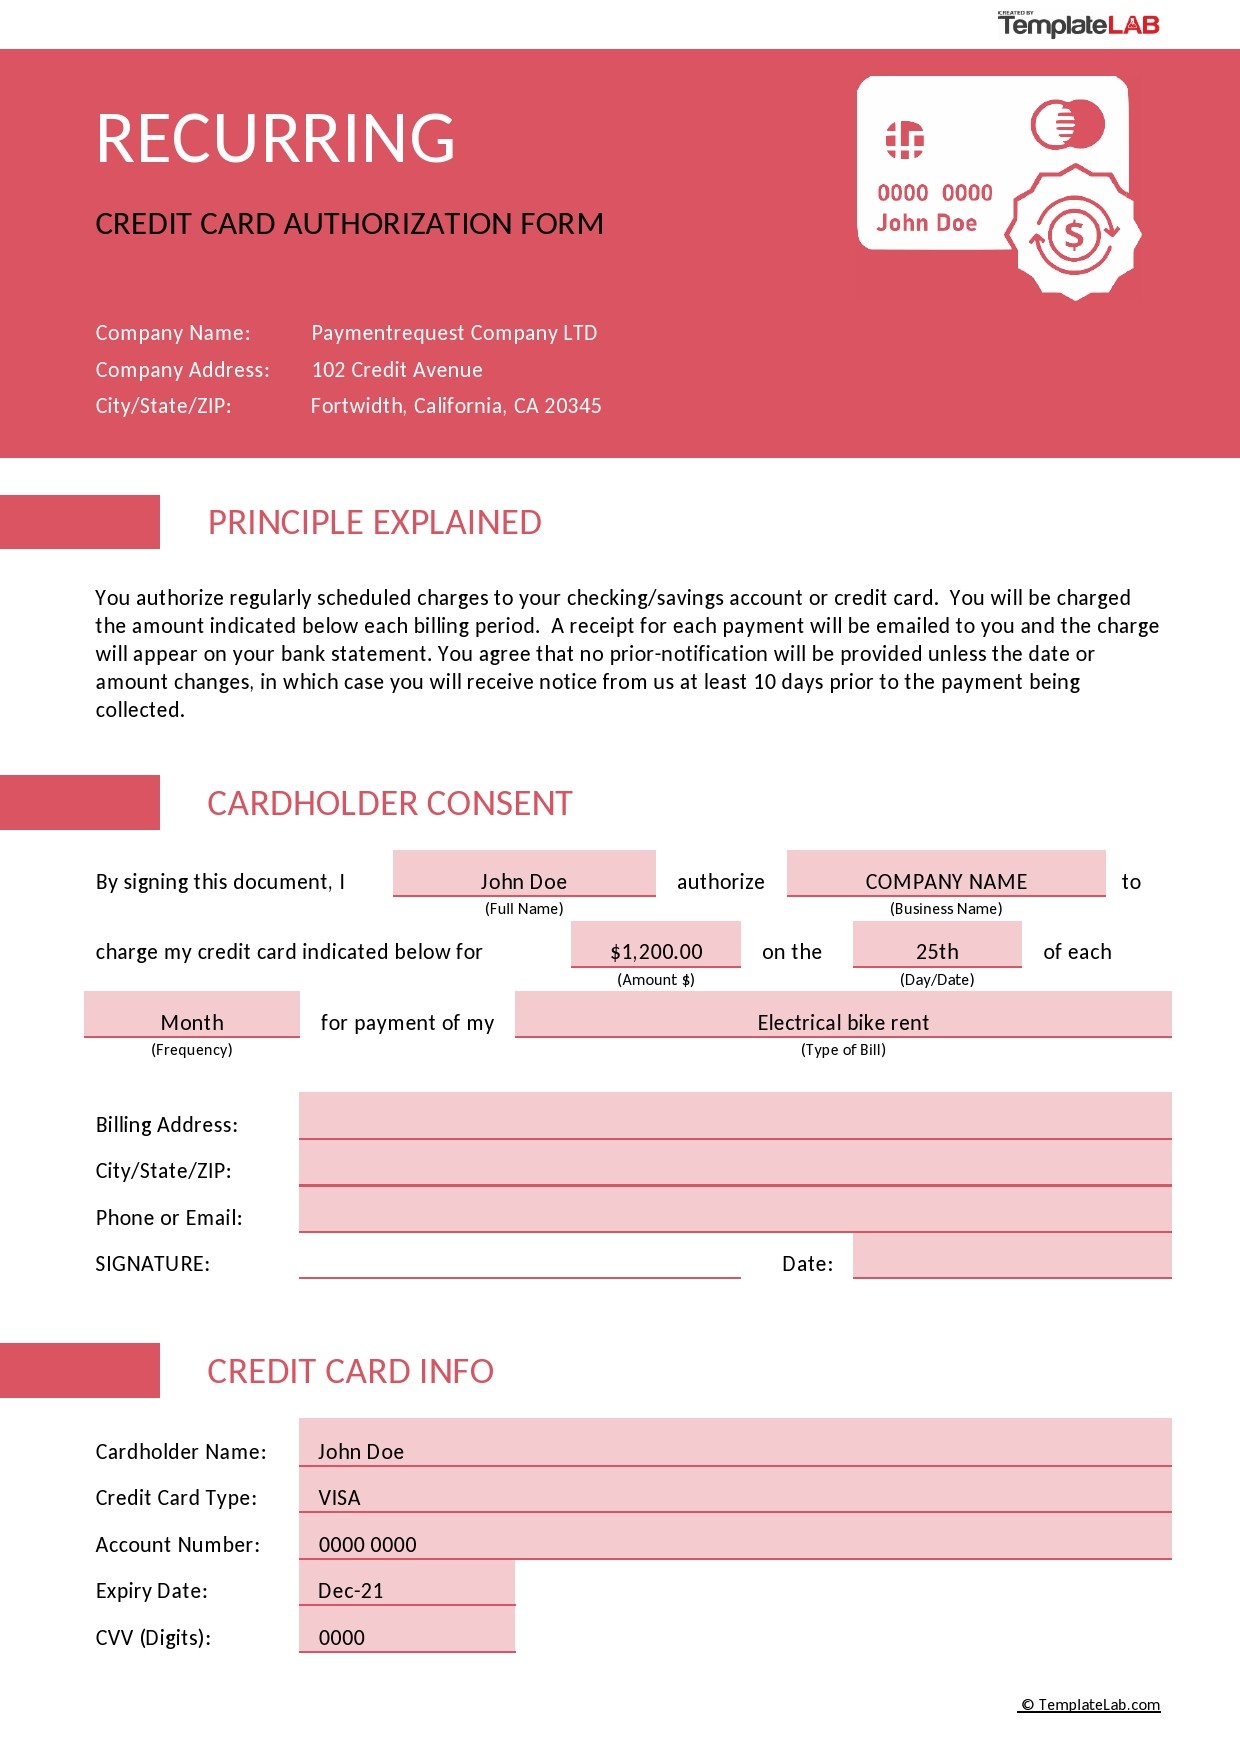 Free Recurring Credit Card Authorization Form - TemplateLab.com